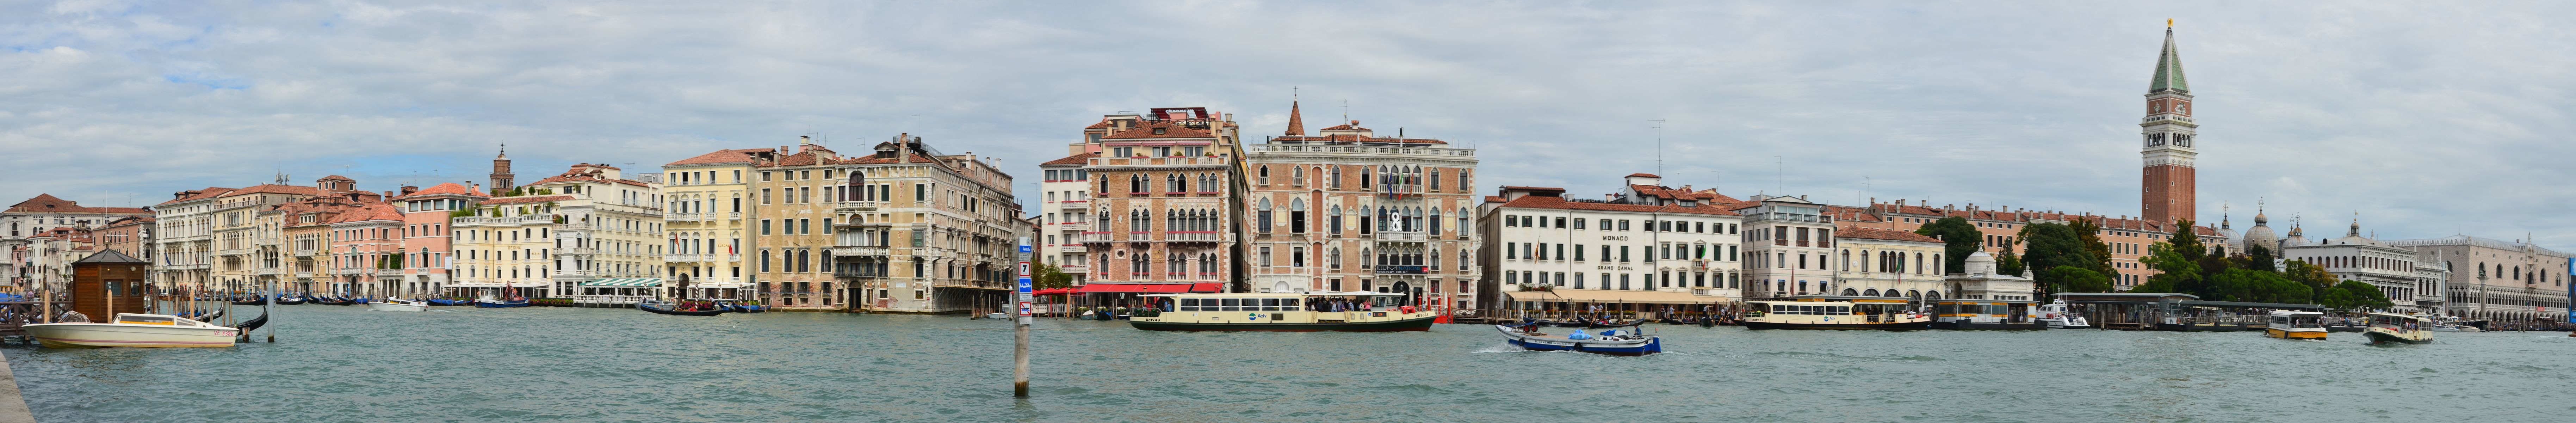 The Grand Canal - Venice2.jpg